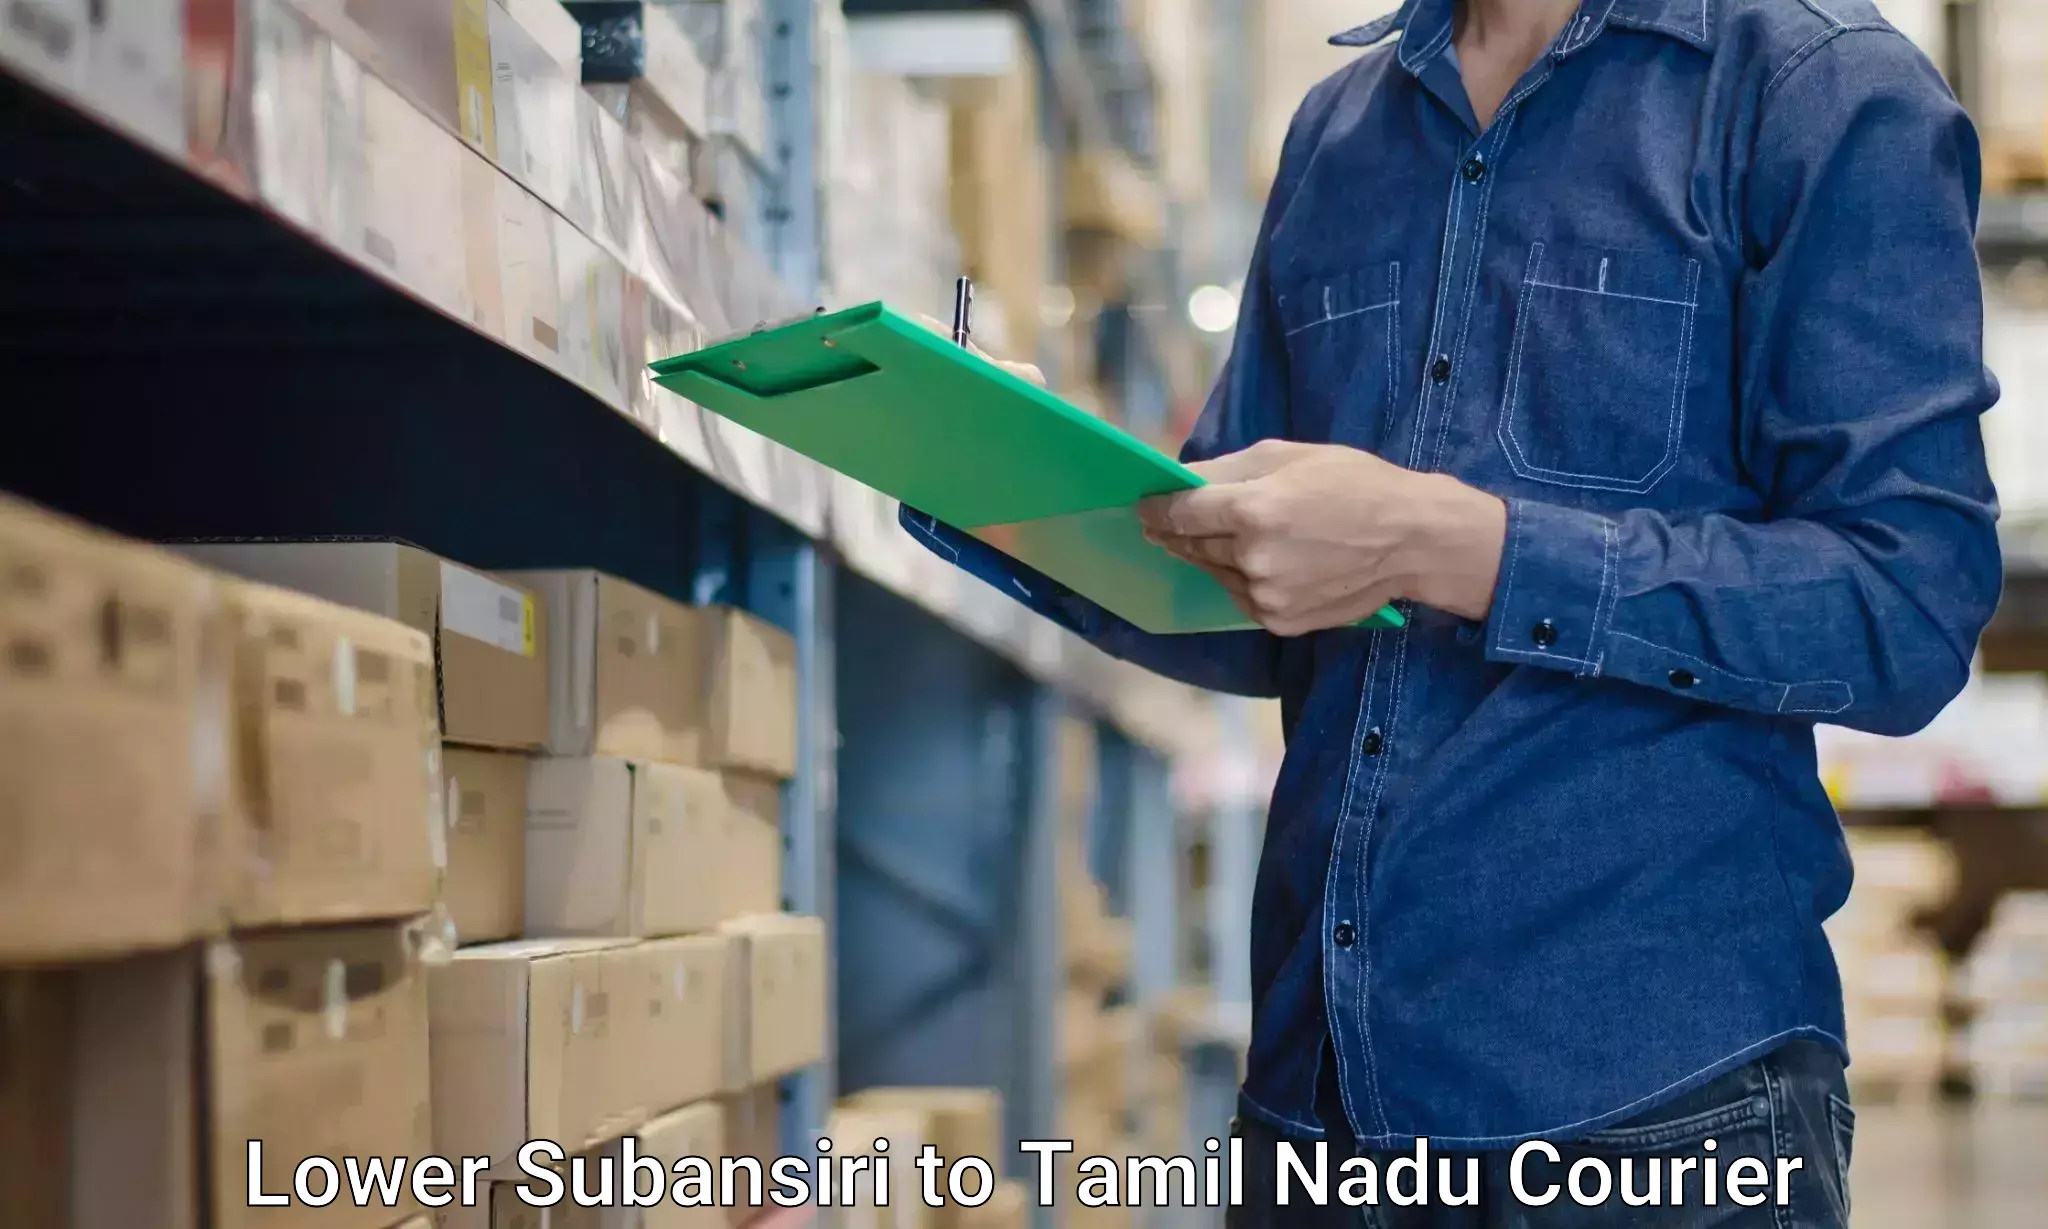 Professional moving company Lower Subansiri to Tamil Nadu